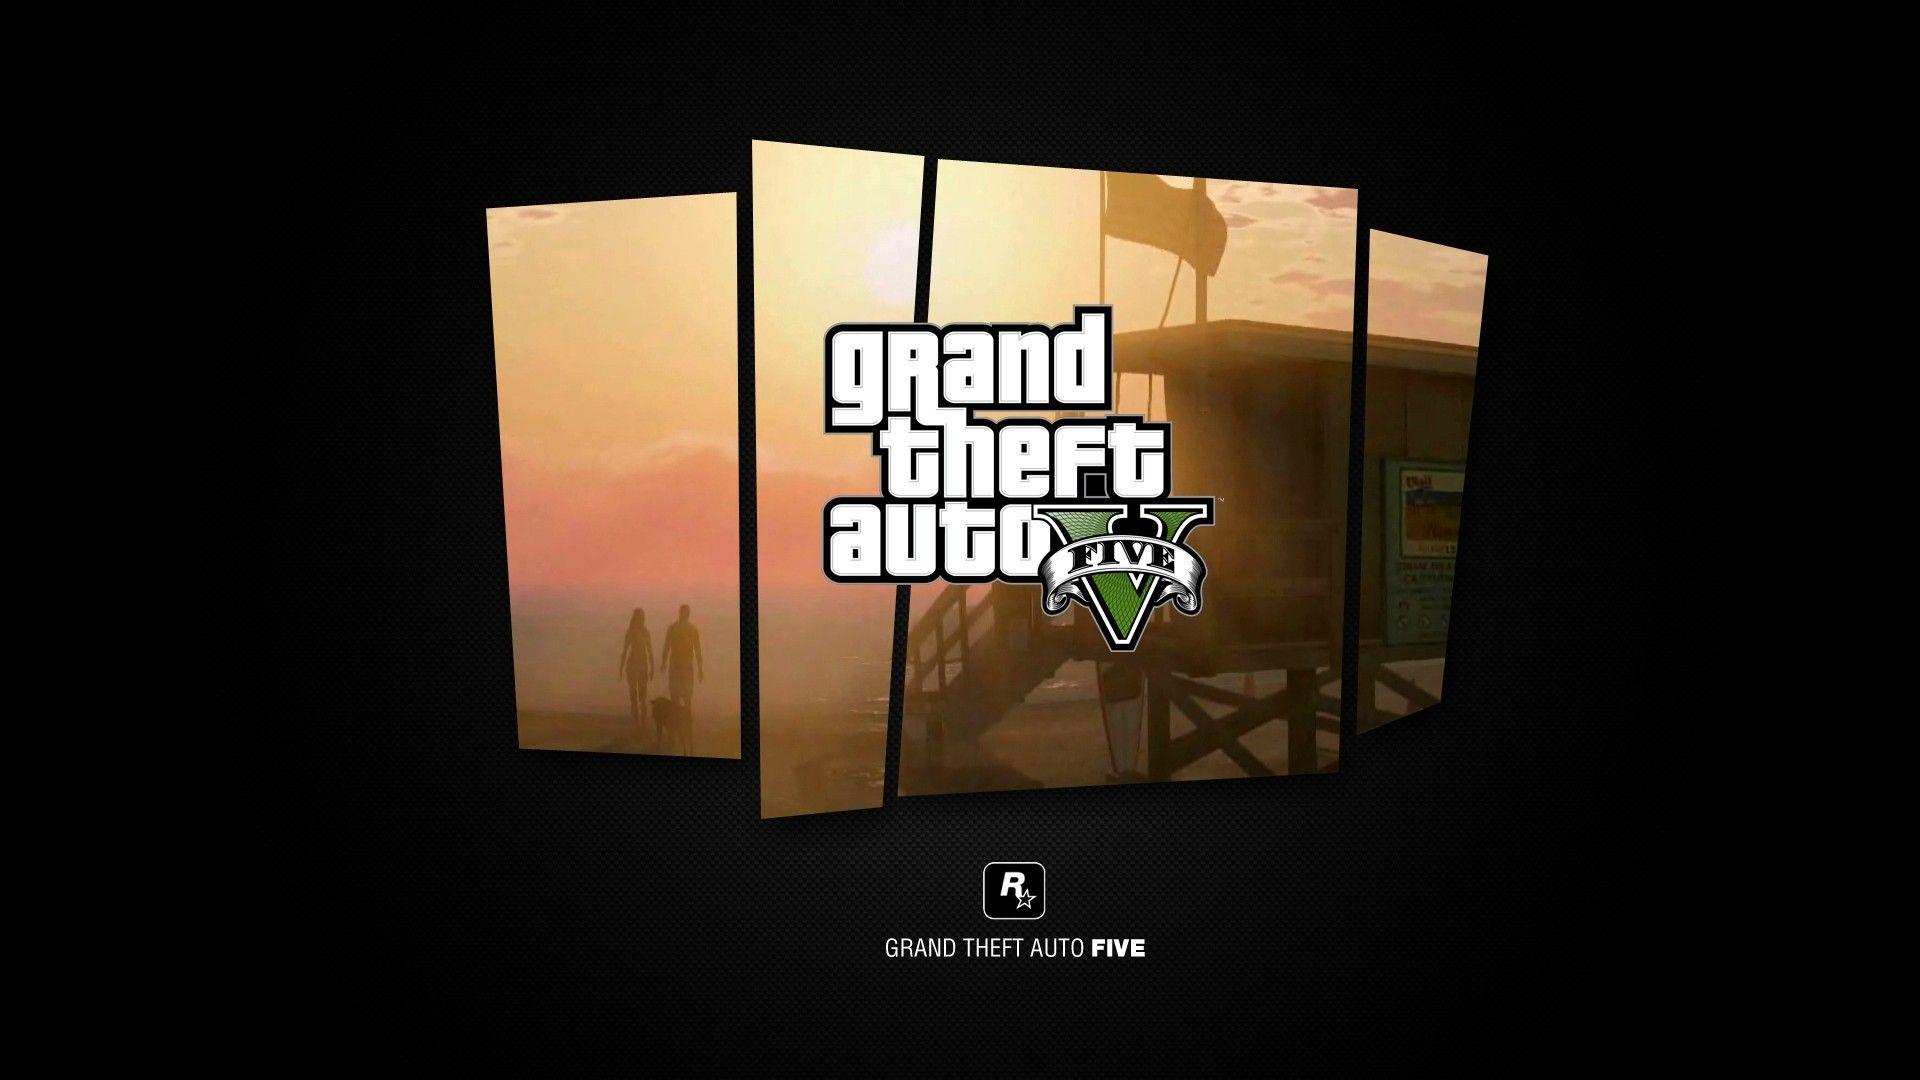 video games, Grand Theft Auto, Rockstar games, Grand Theft Auto V